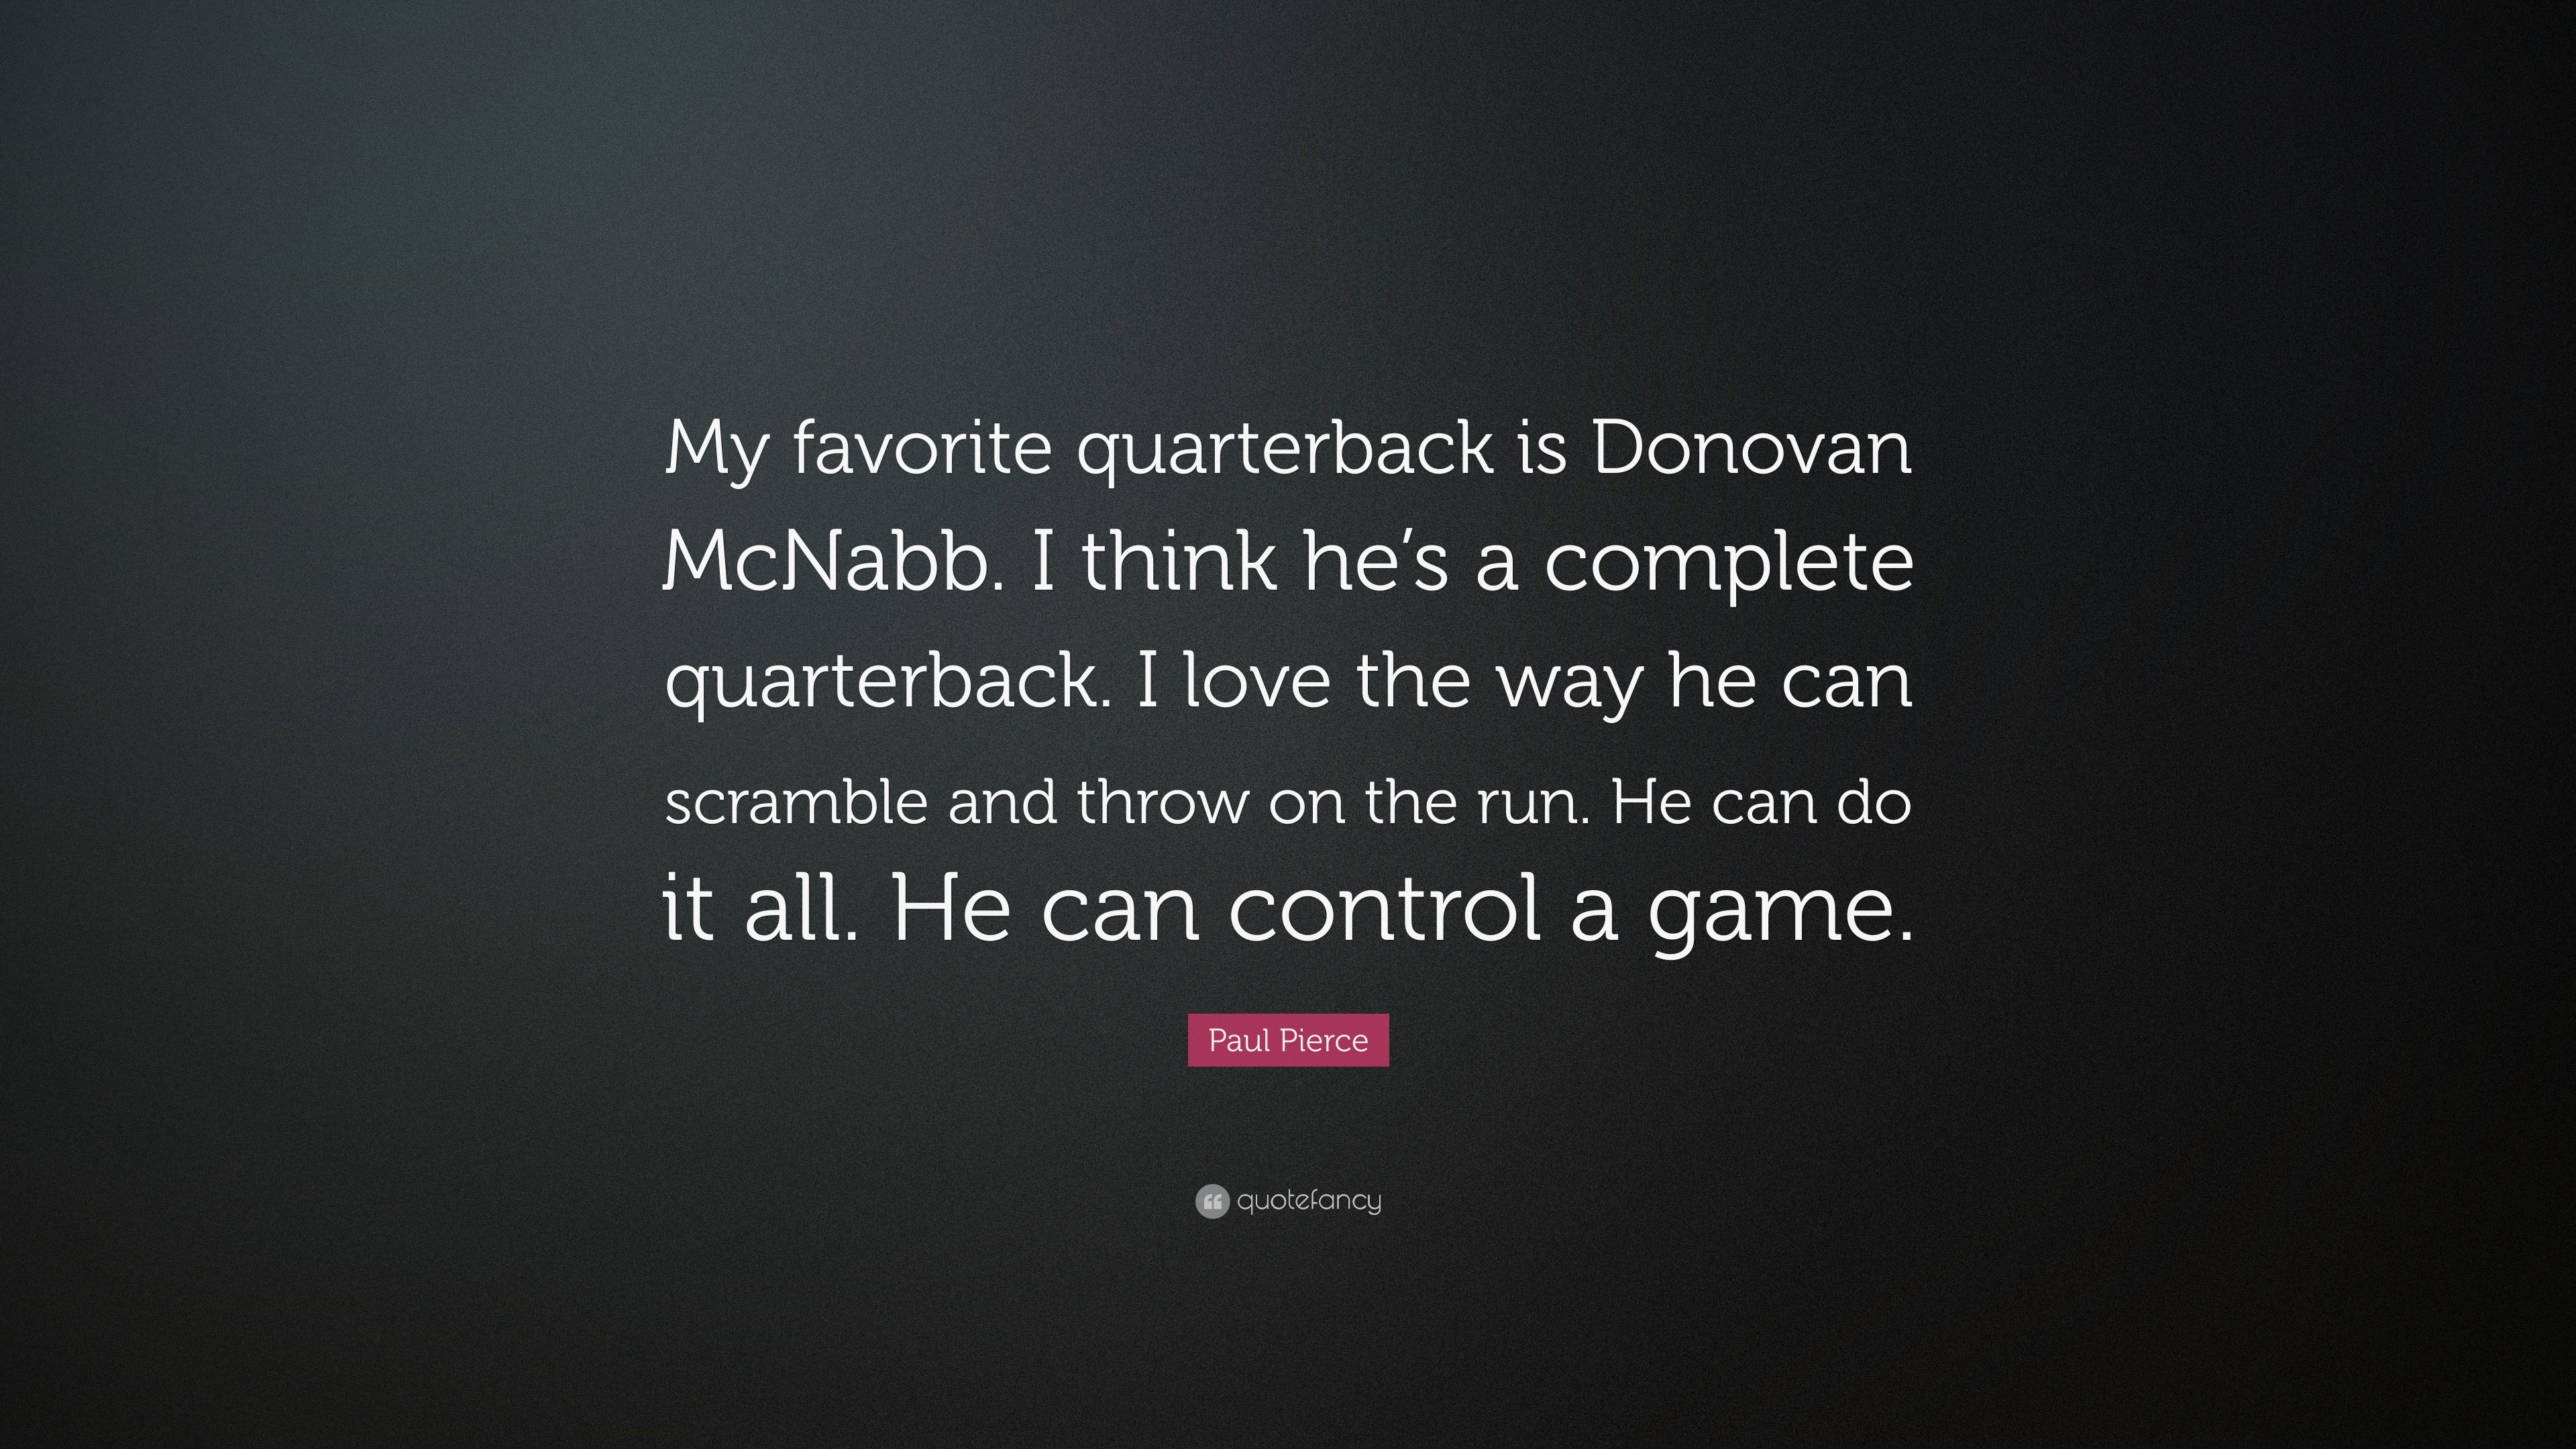 3840x2160 Paul Pierce Quote: “My favorite quarterback is Donovan McNabb. I think he's  a